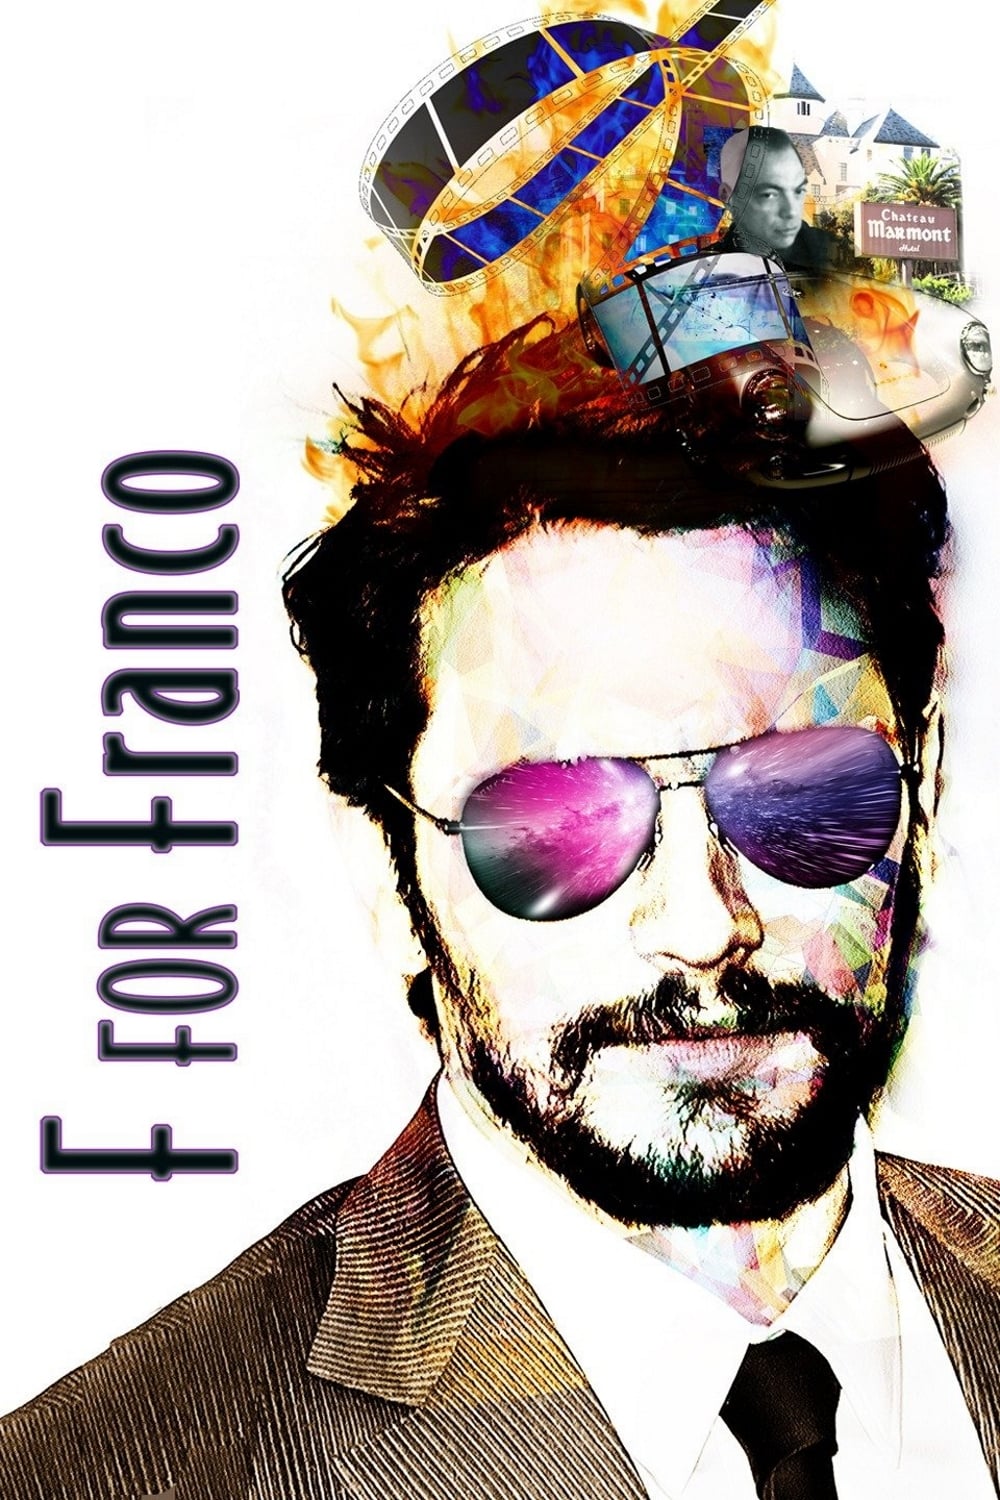 F for Franco (2016)